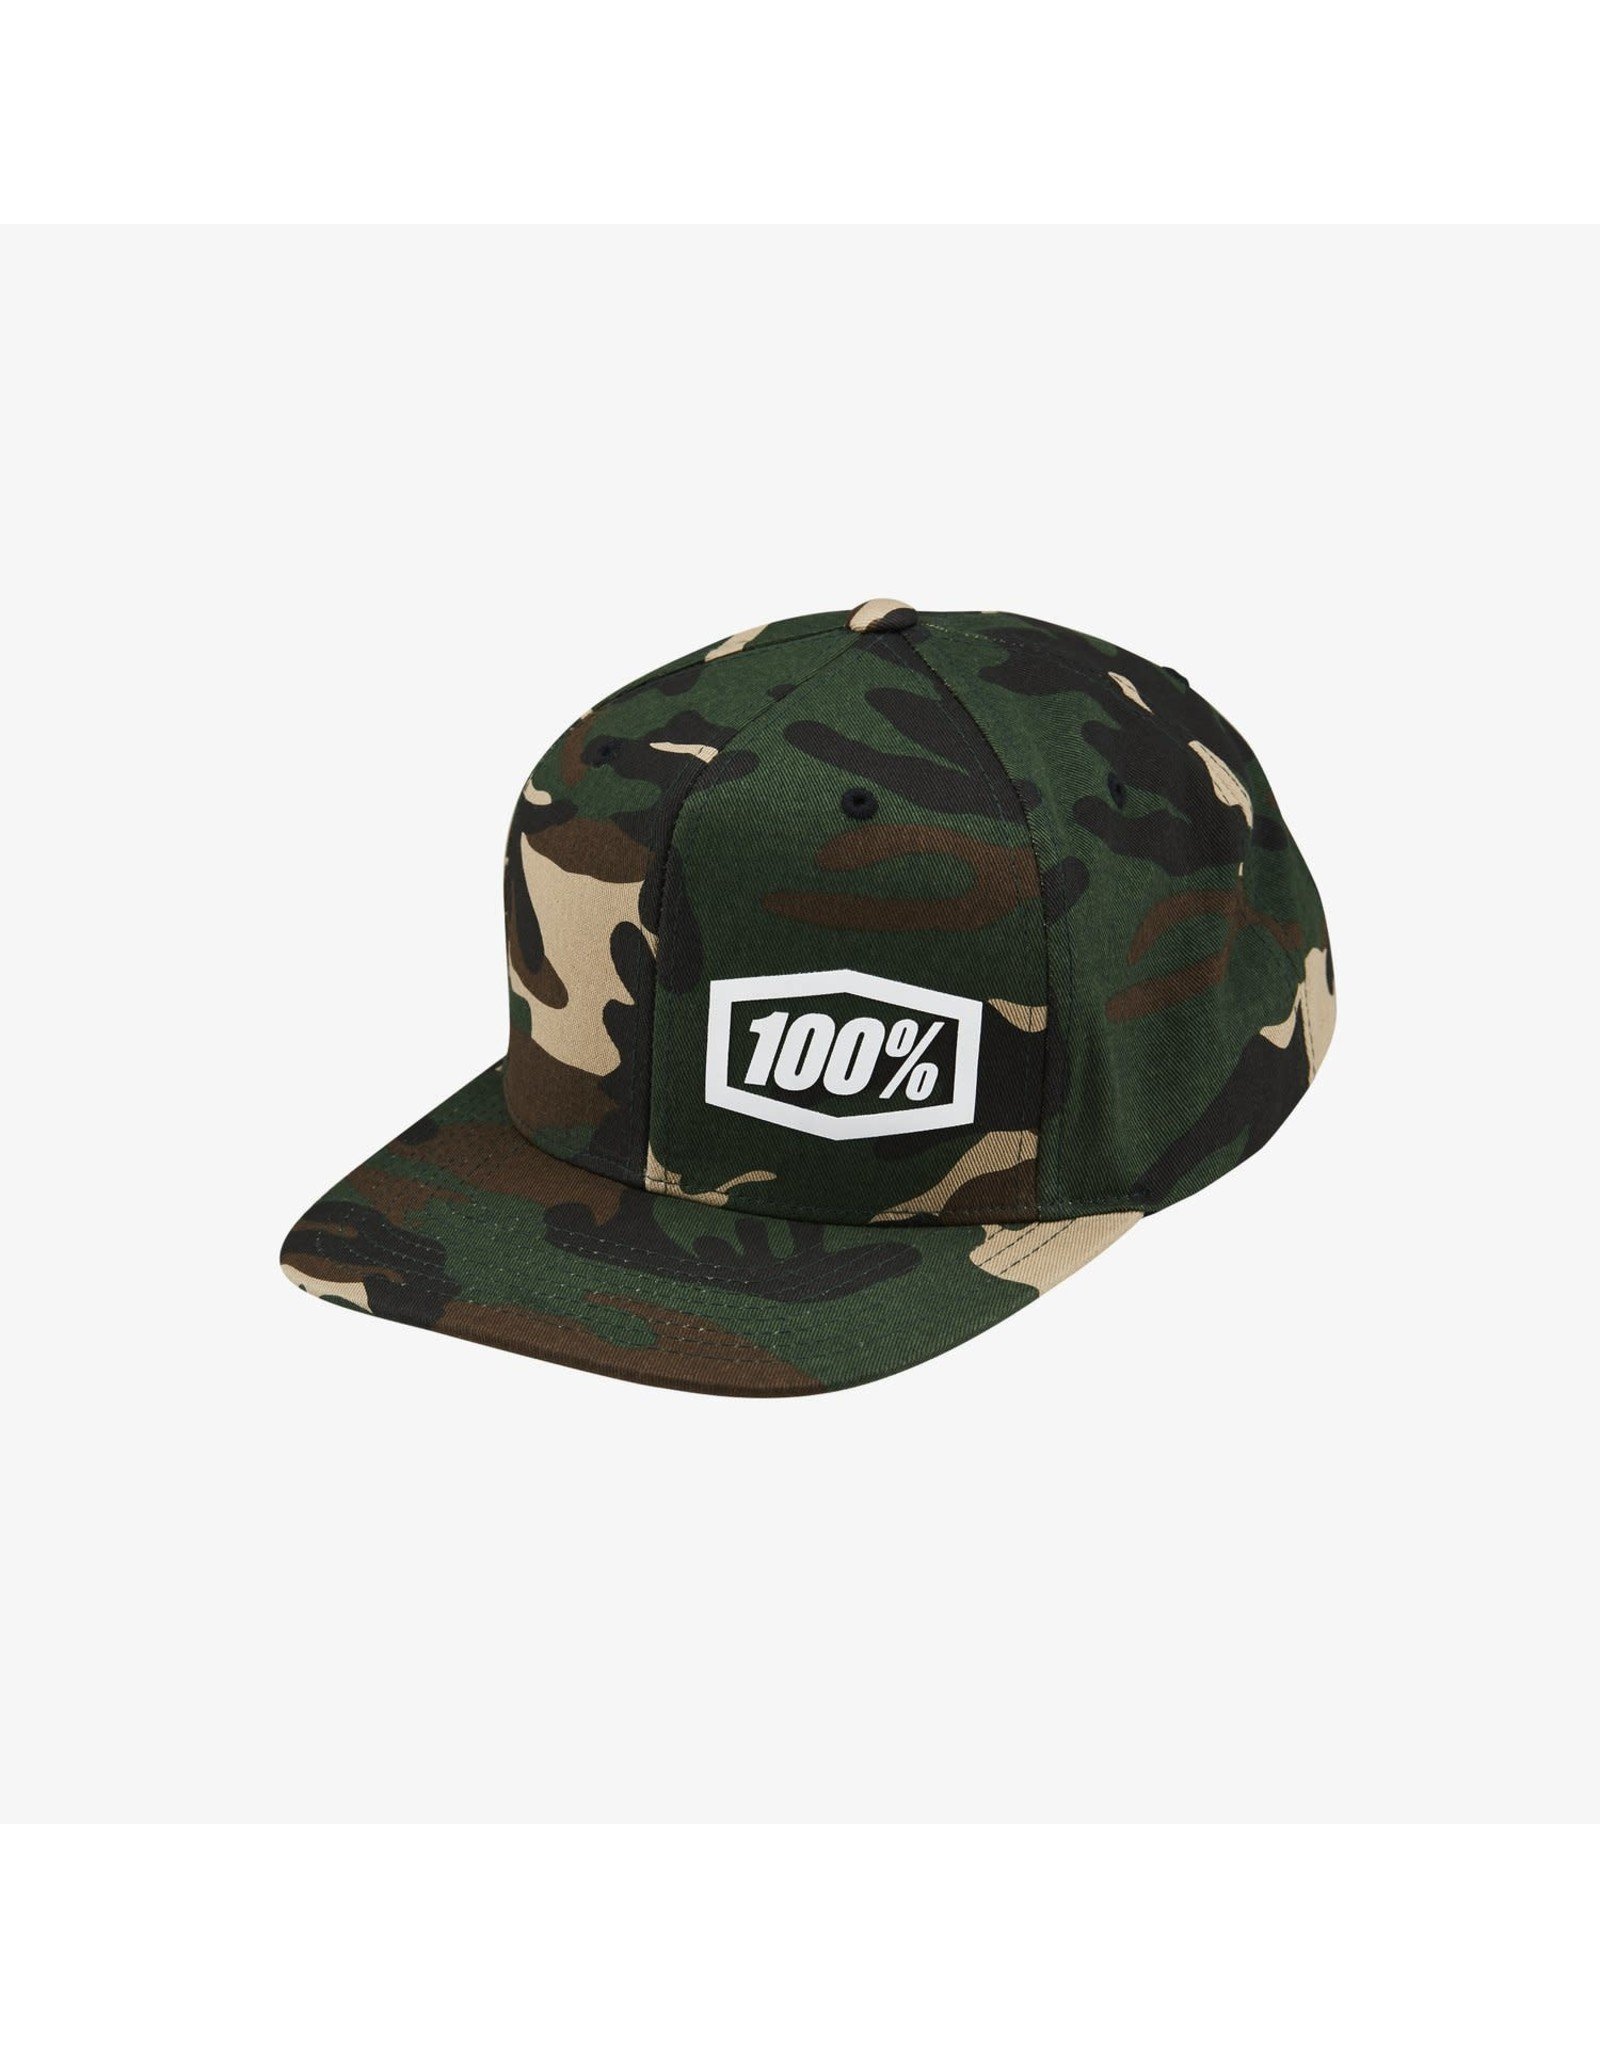 100% 100% Machine Snapback Hat, Camo, One Size